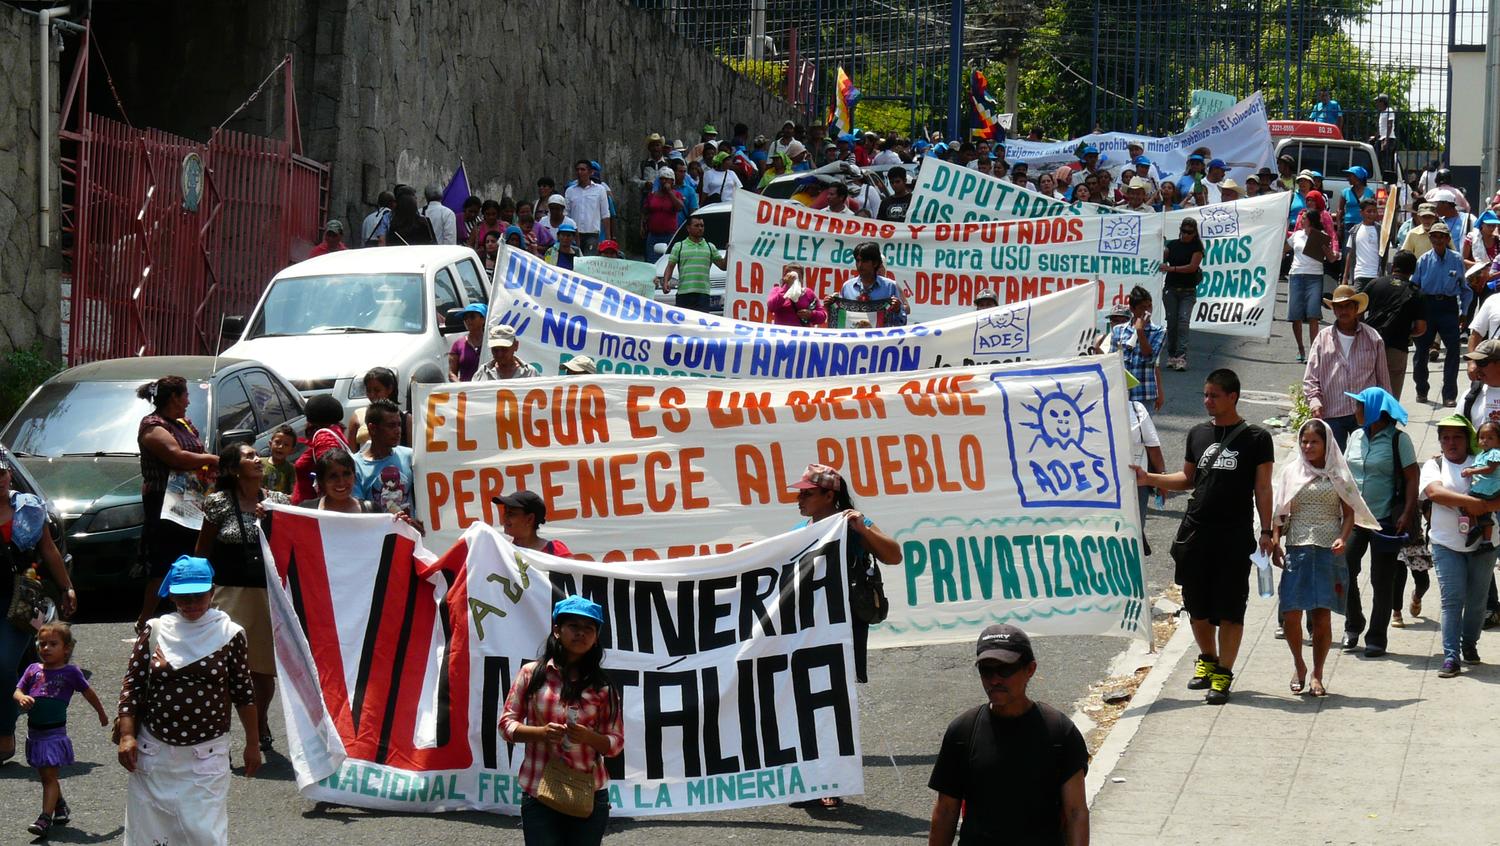 Credit International Allies Against Mining in El Salvador